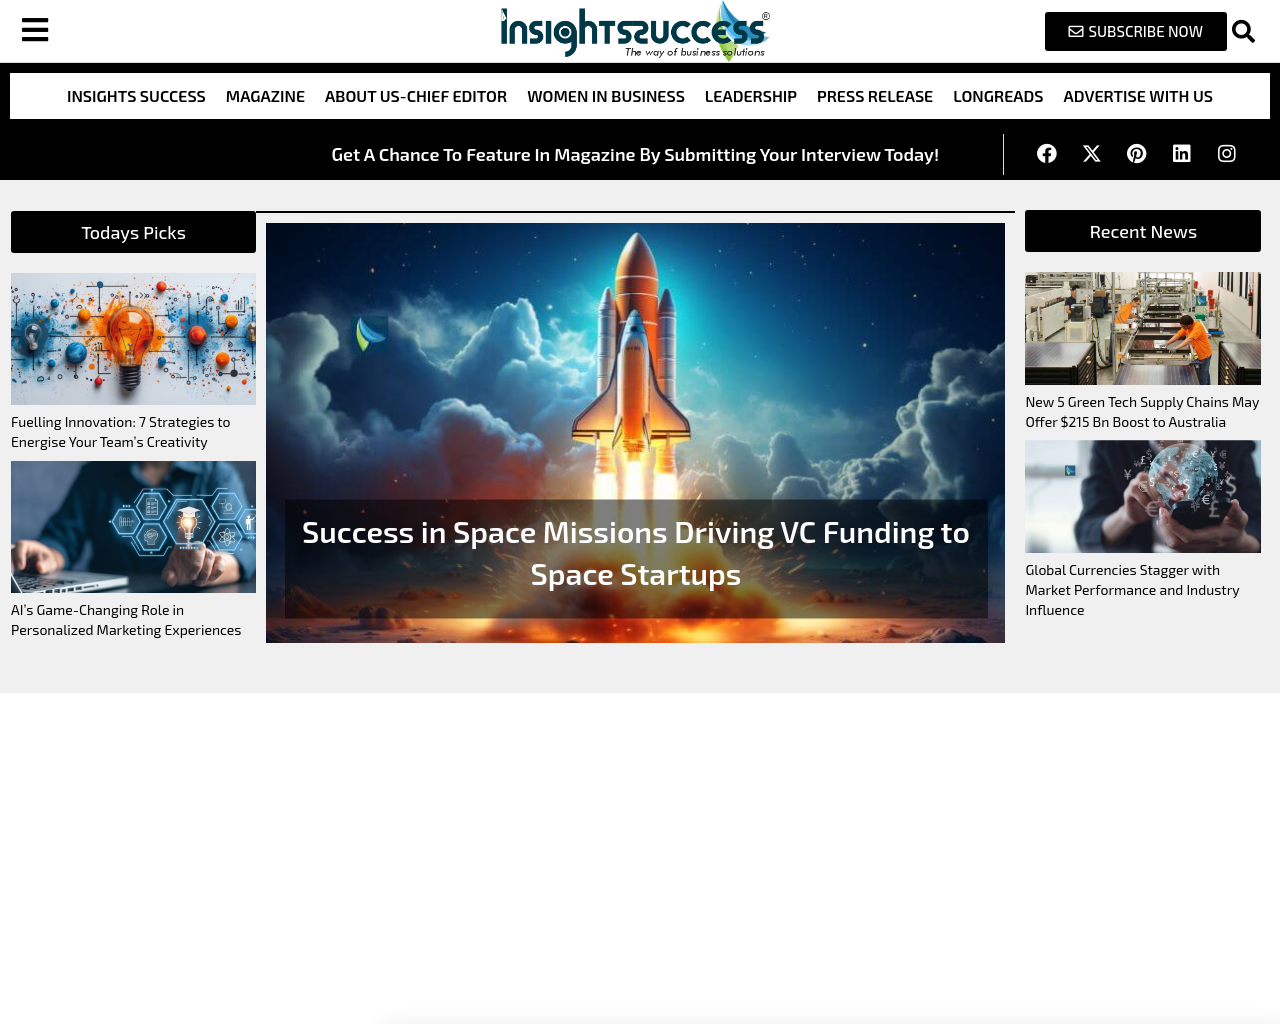 insightssuccess.com